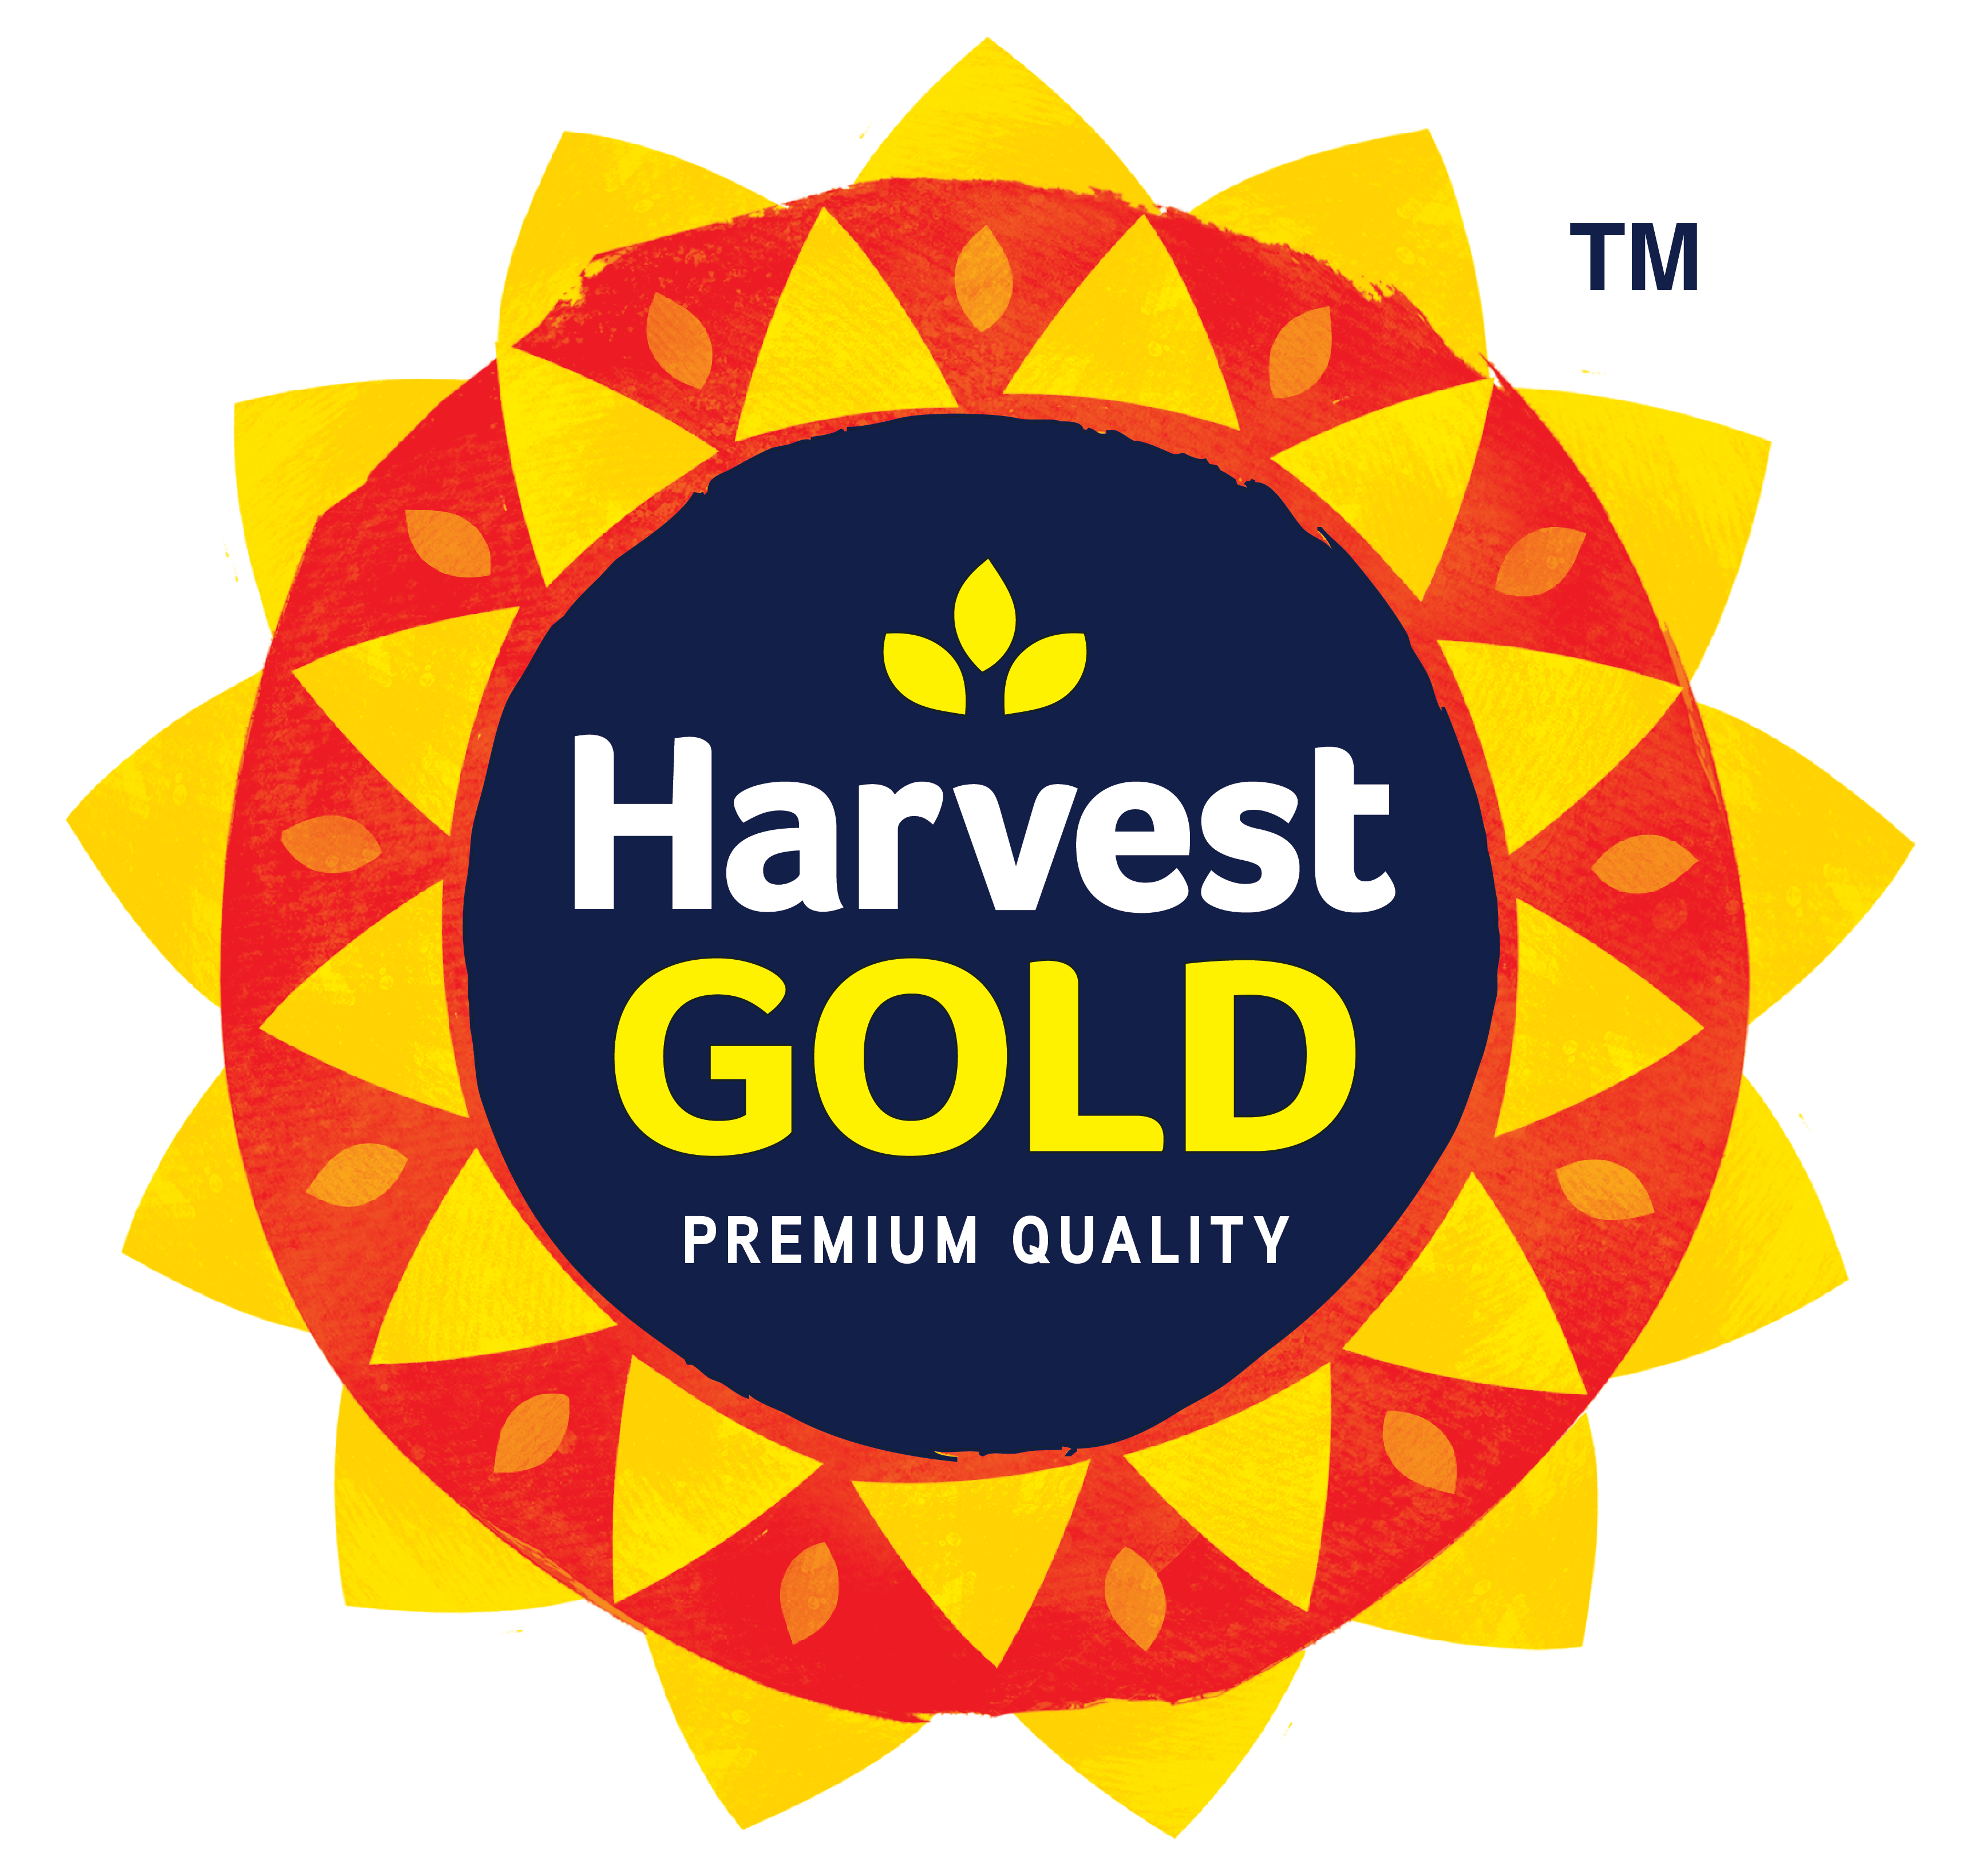 Harvest gold logo